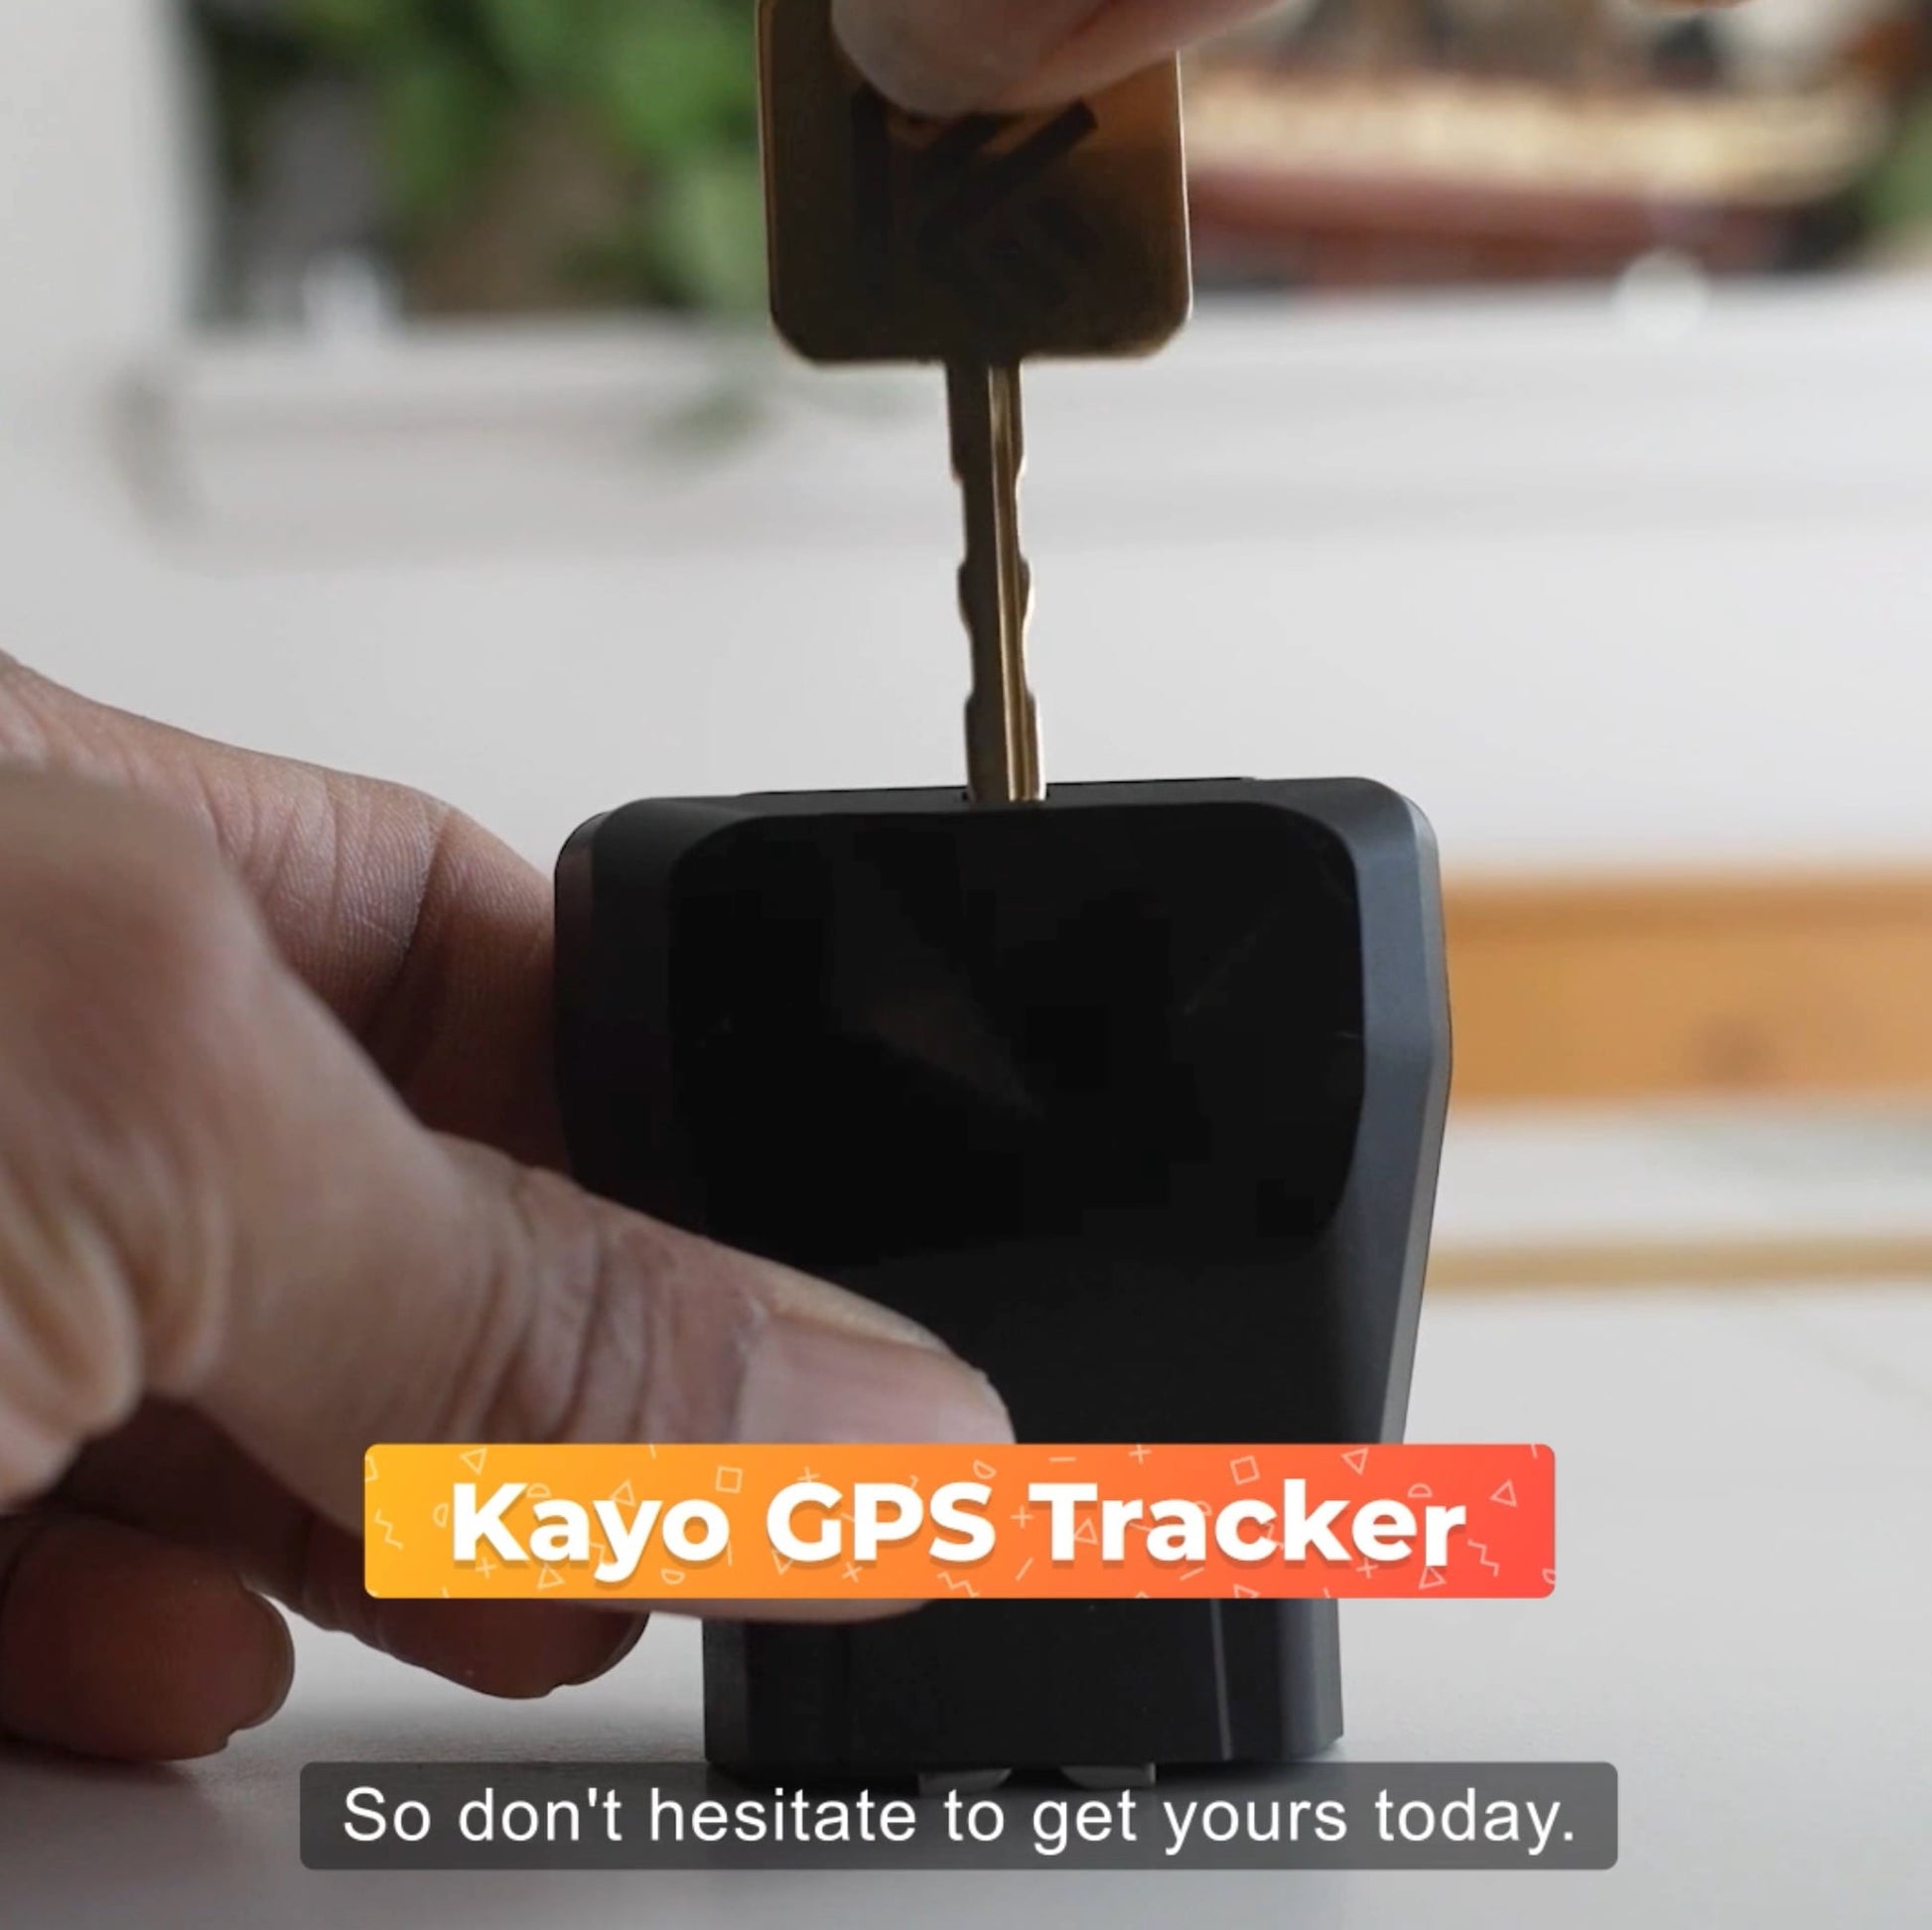 The Kayo GPS tracking device lock and key demo.